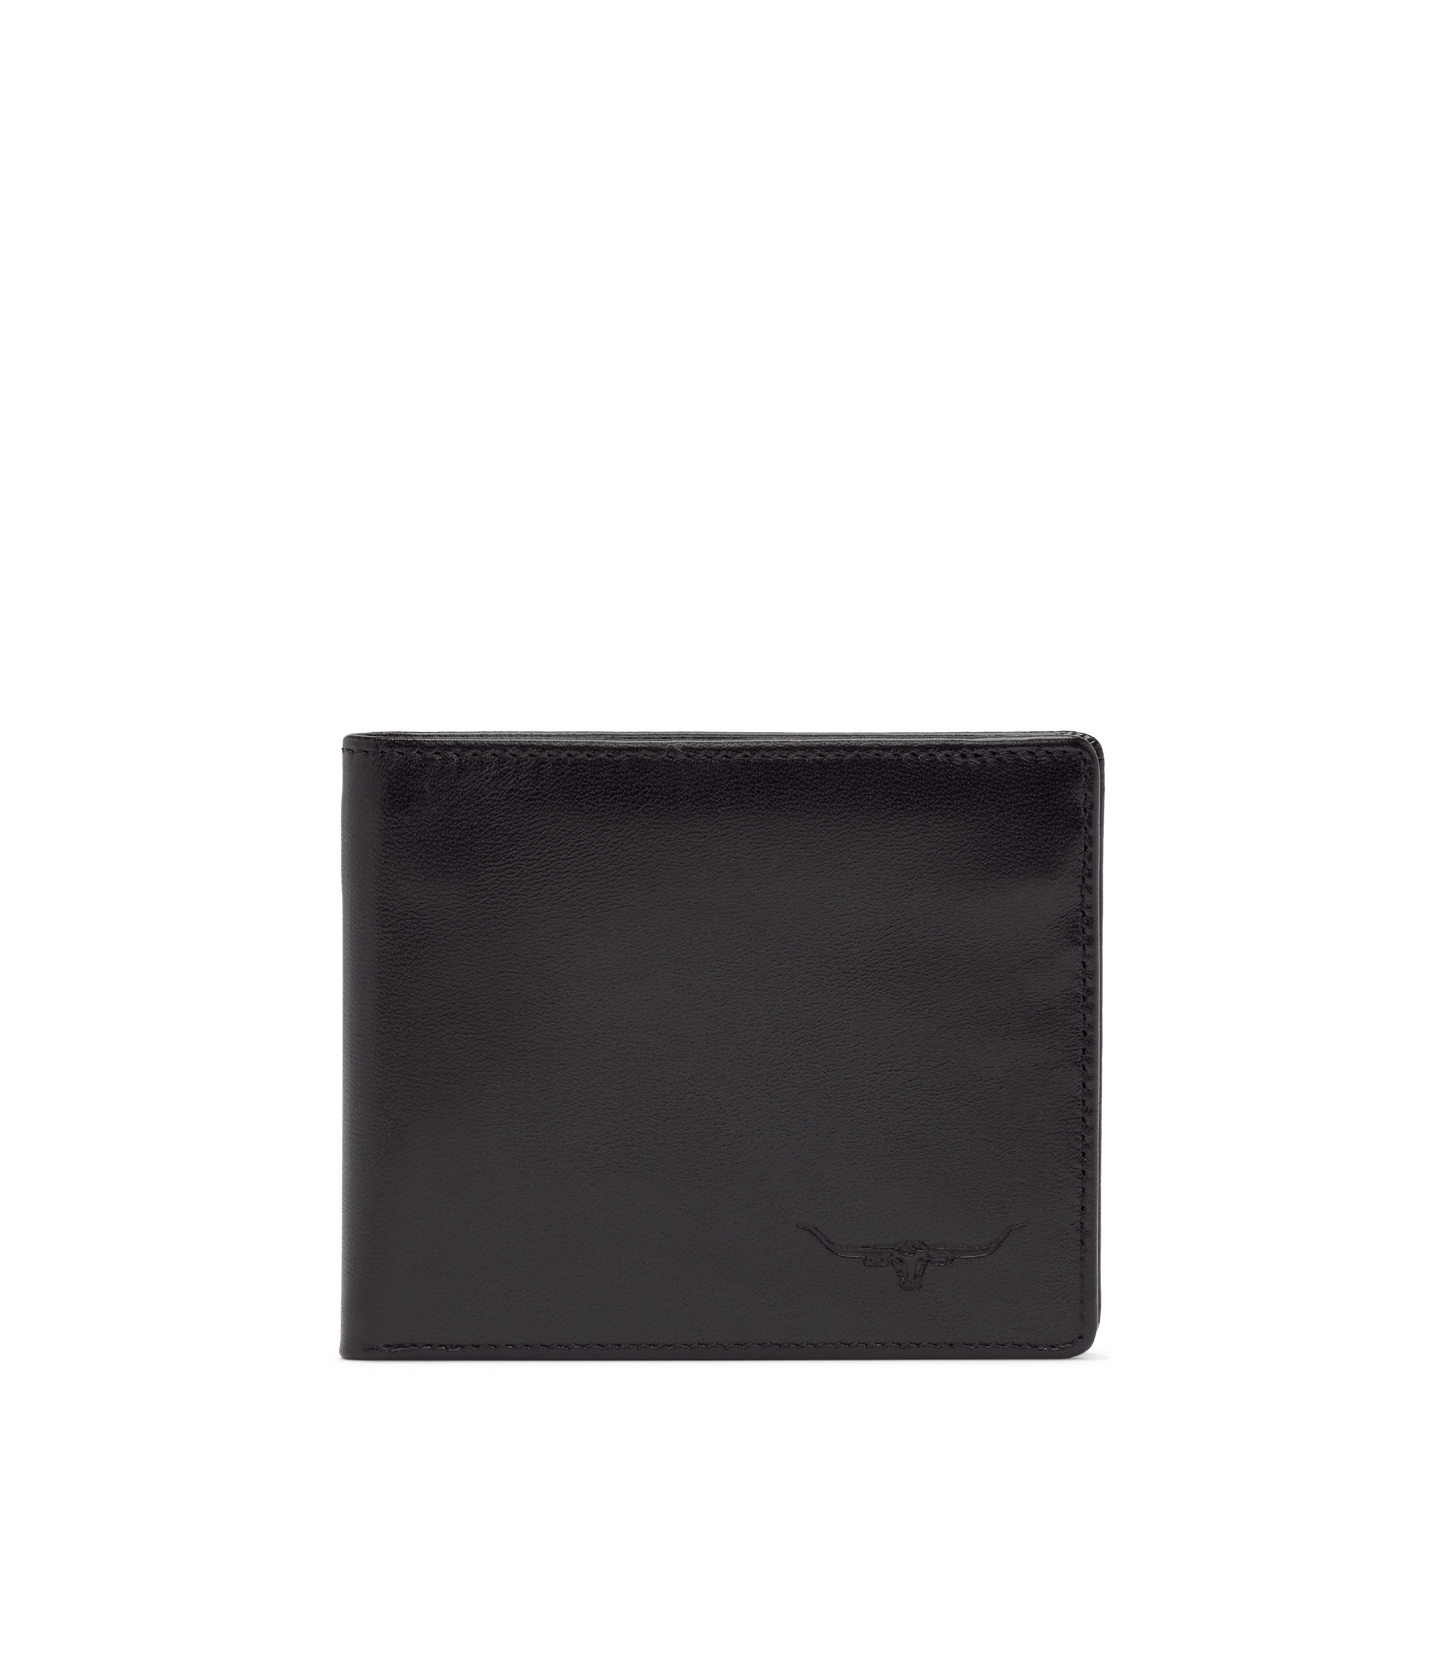 Tri-fold wallet